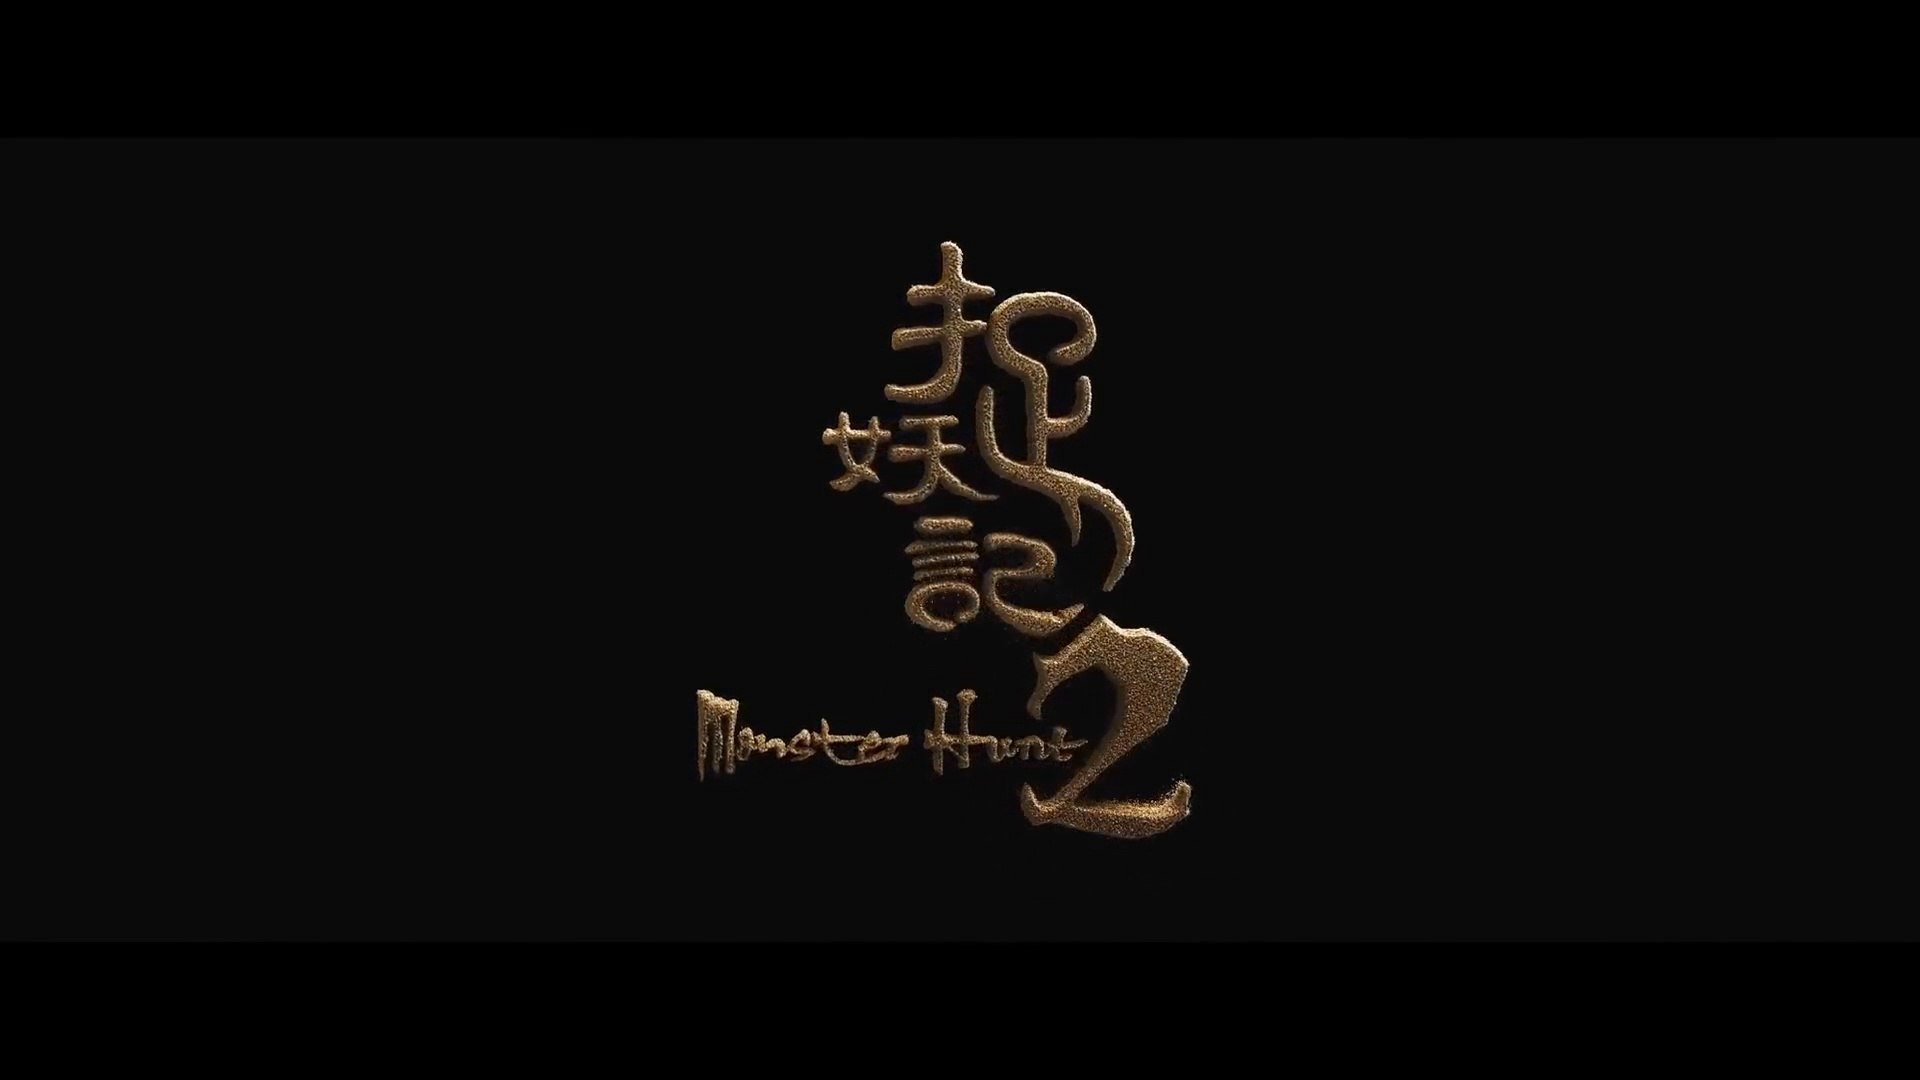 Monster Hunt 2 Official International Trailer (2018) HD 